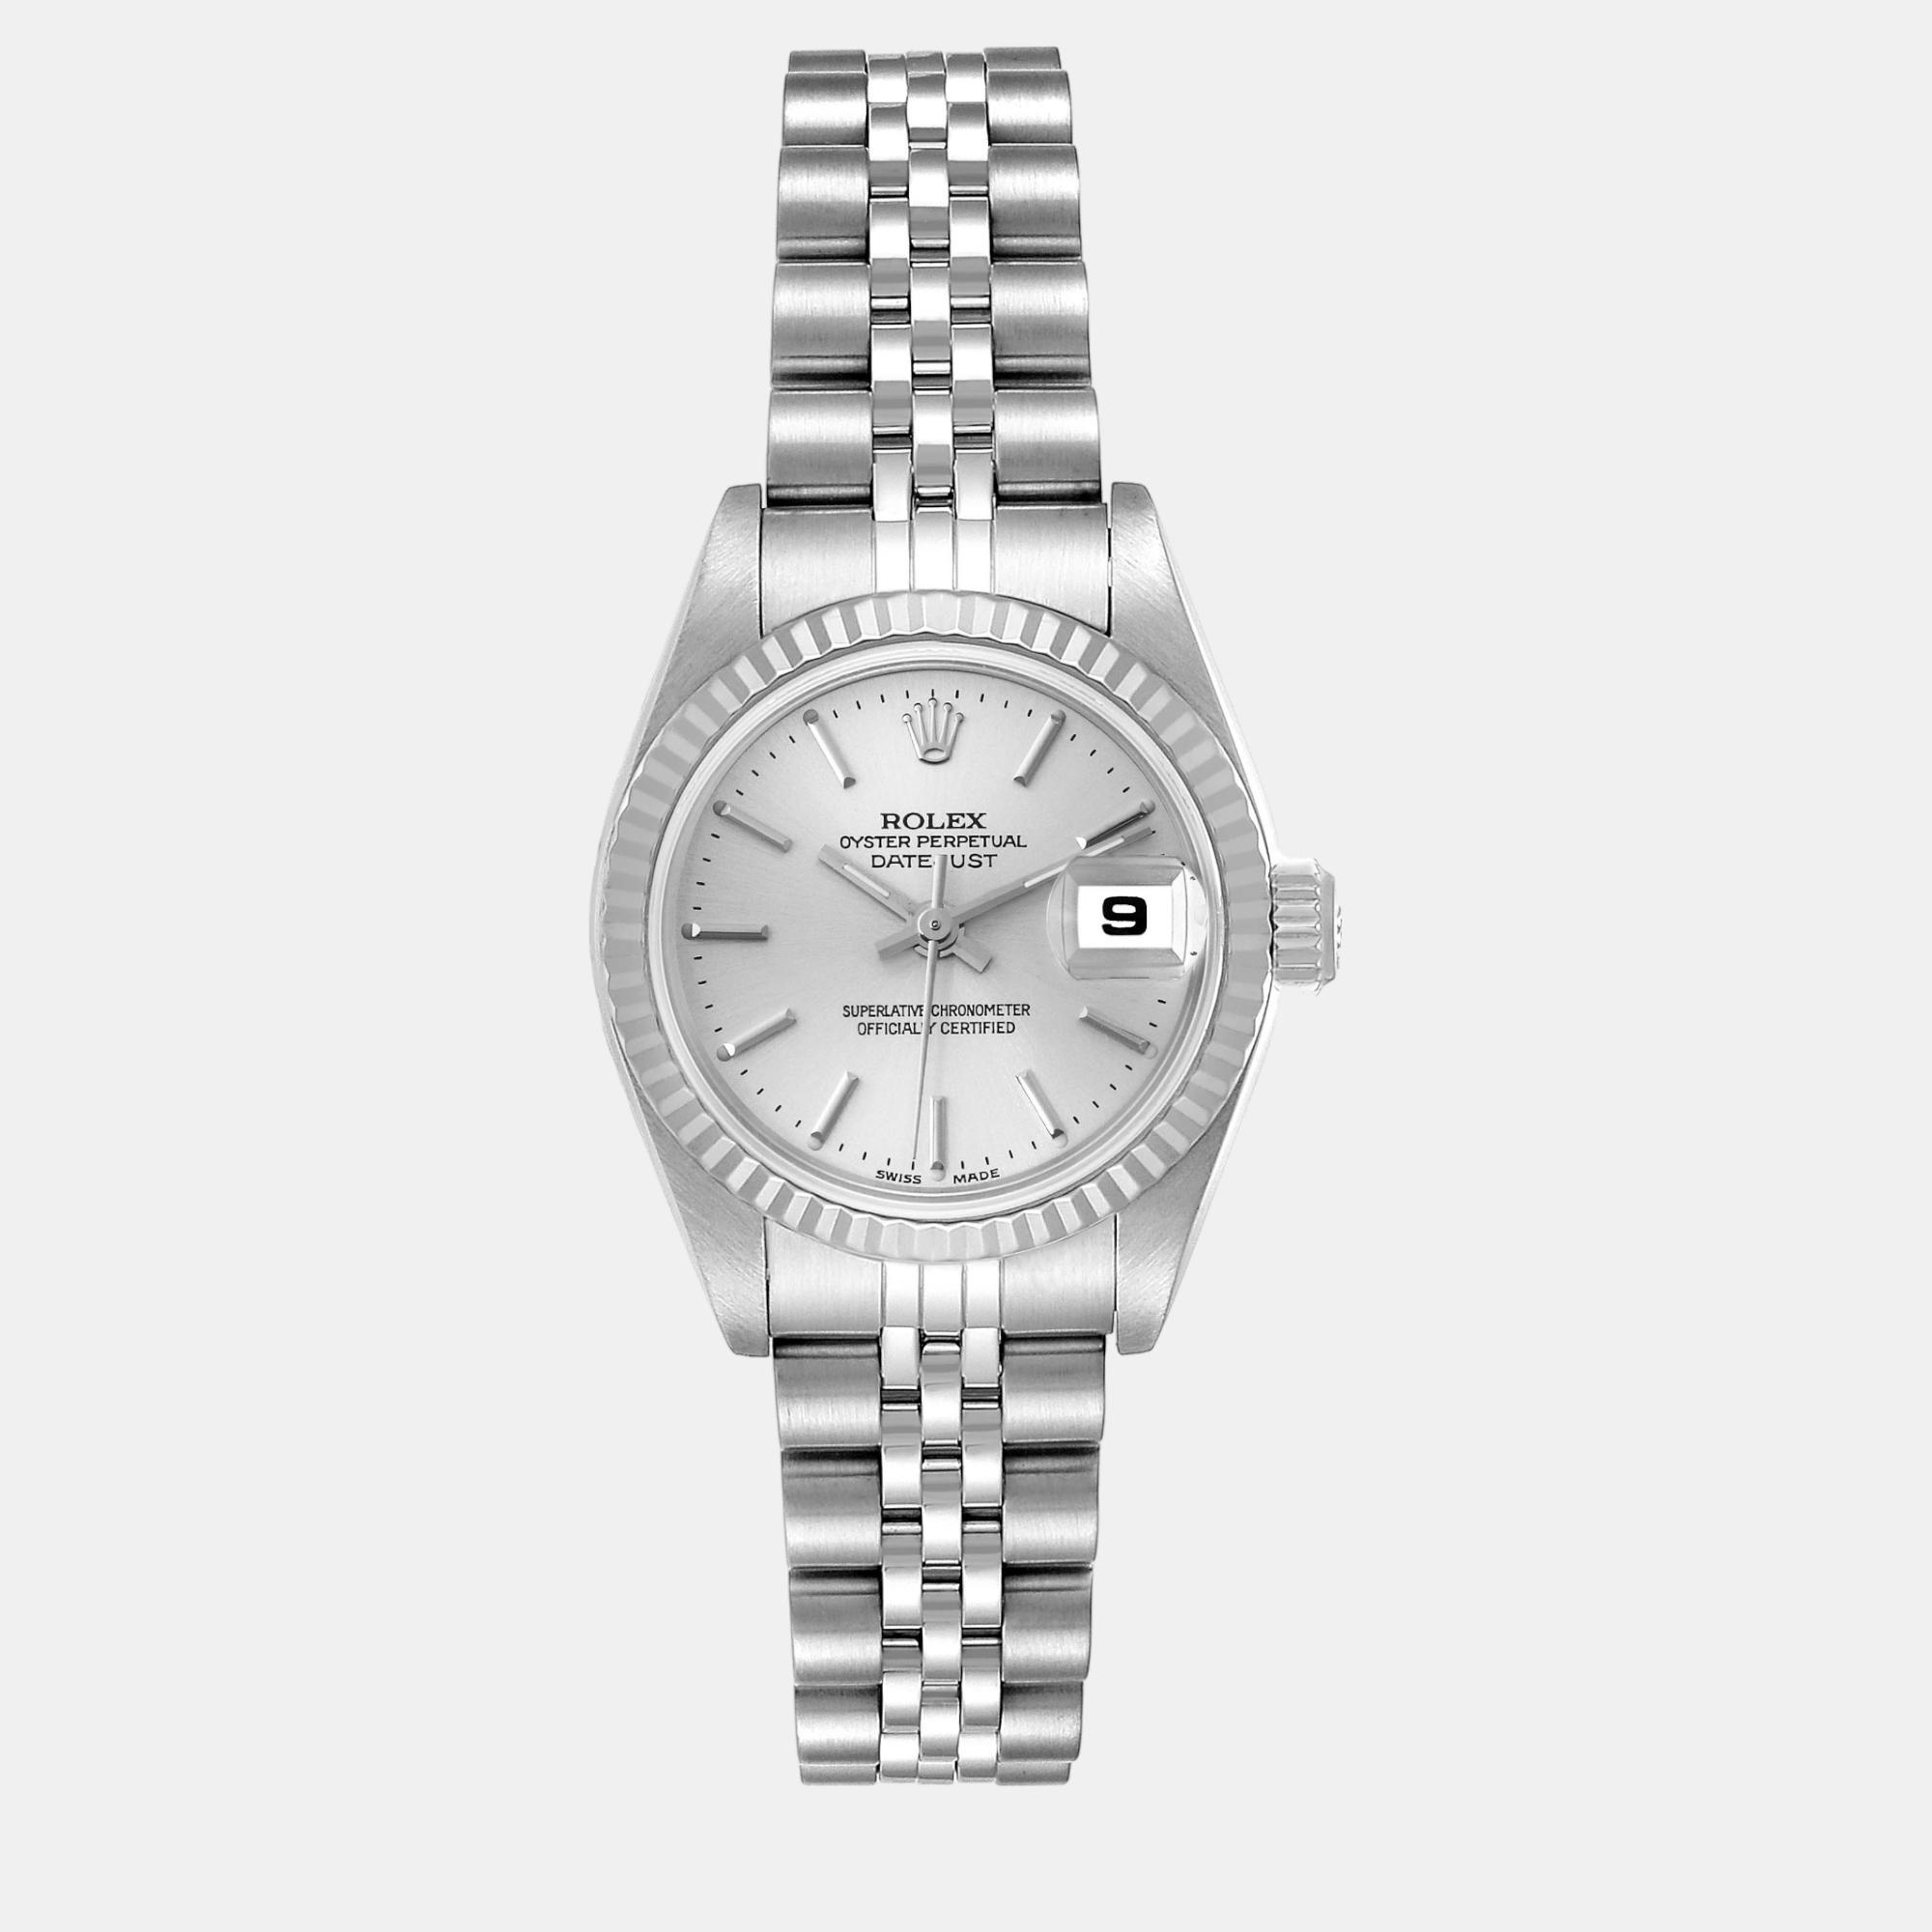 Rolex datejust steel white gold silver dial ladies watch 79174 26 mm